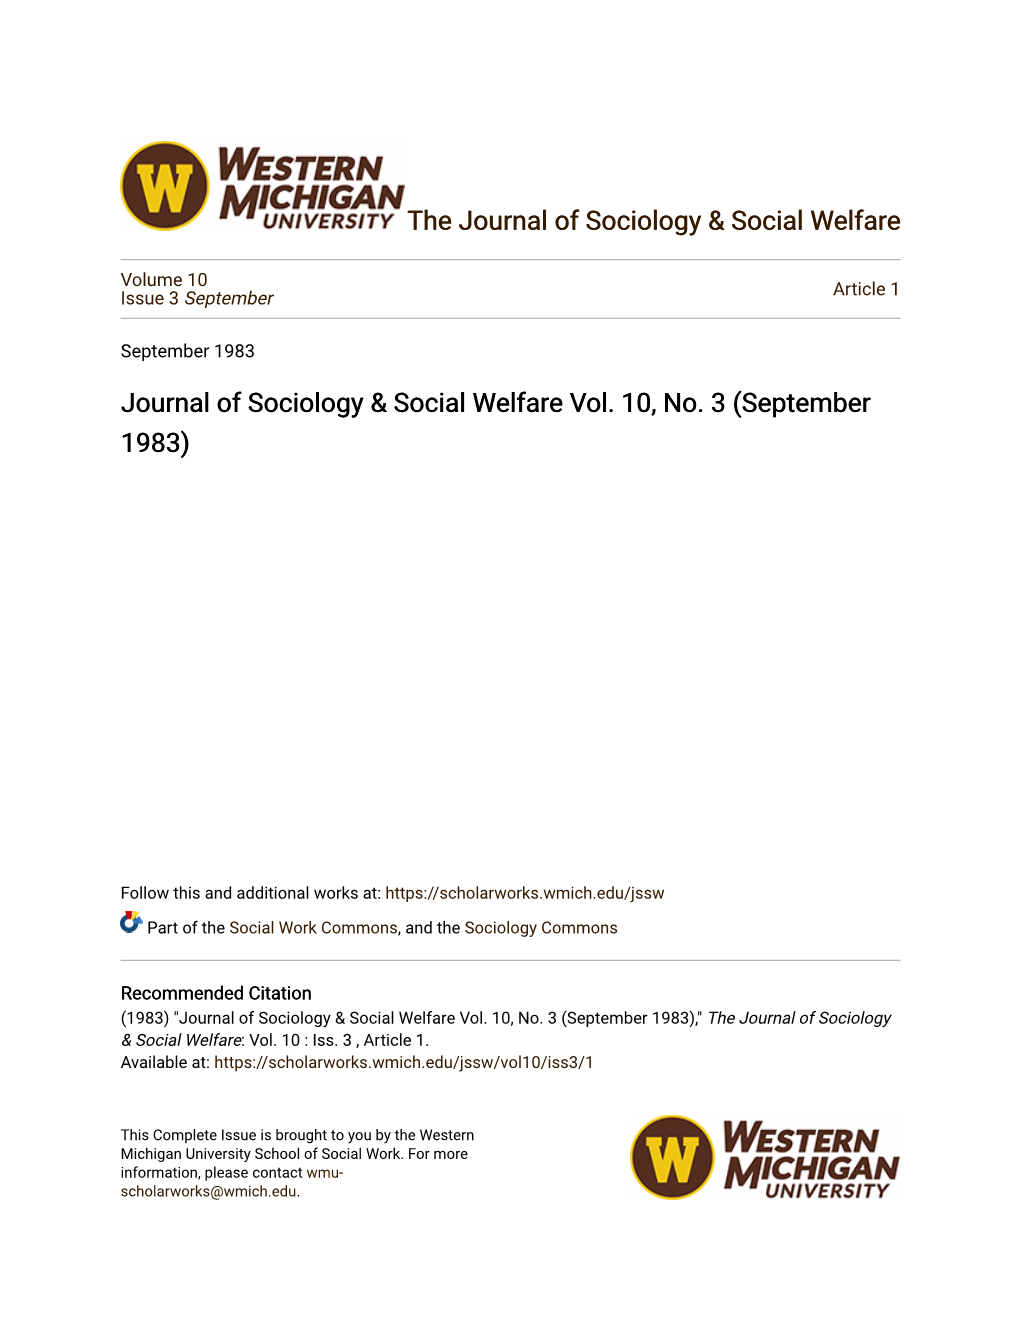 Journal of Sociology & Social Welfare Vol. 10, No. 3